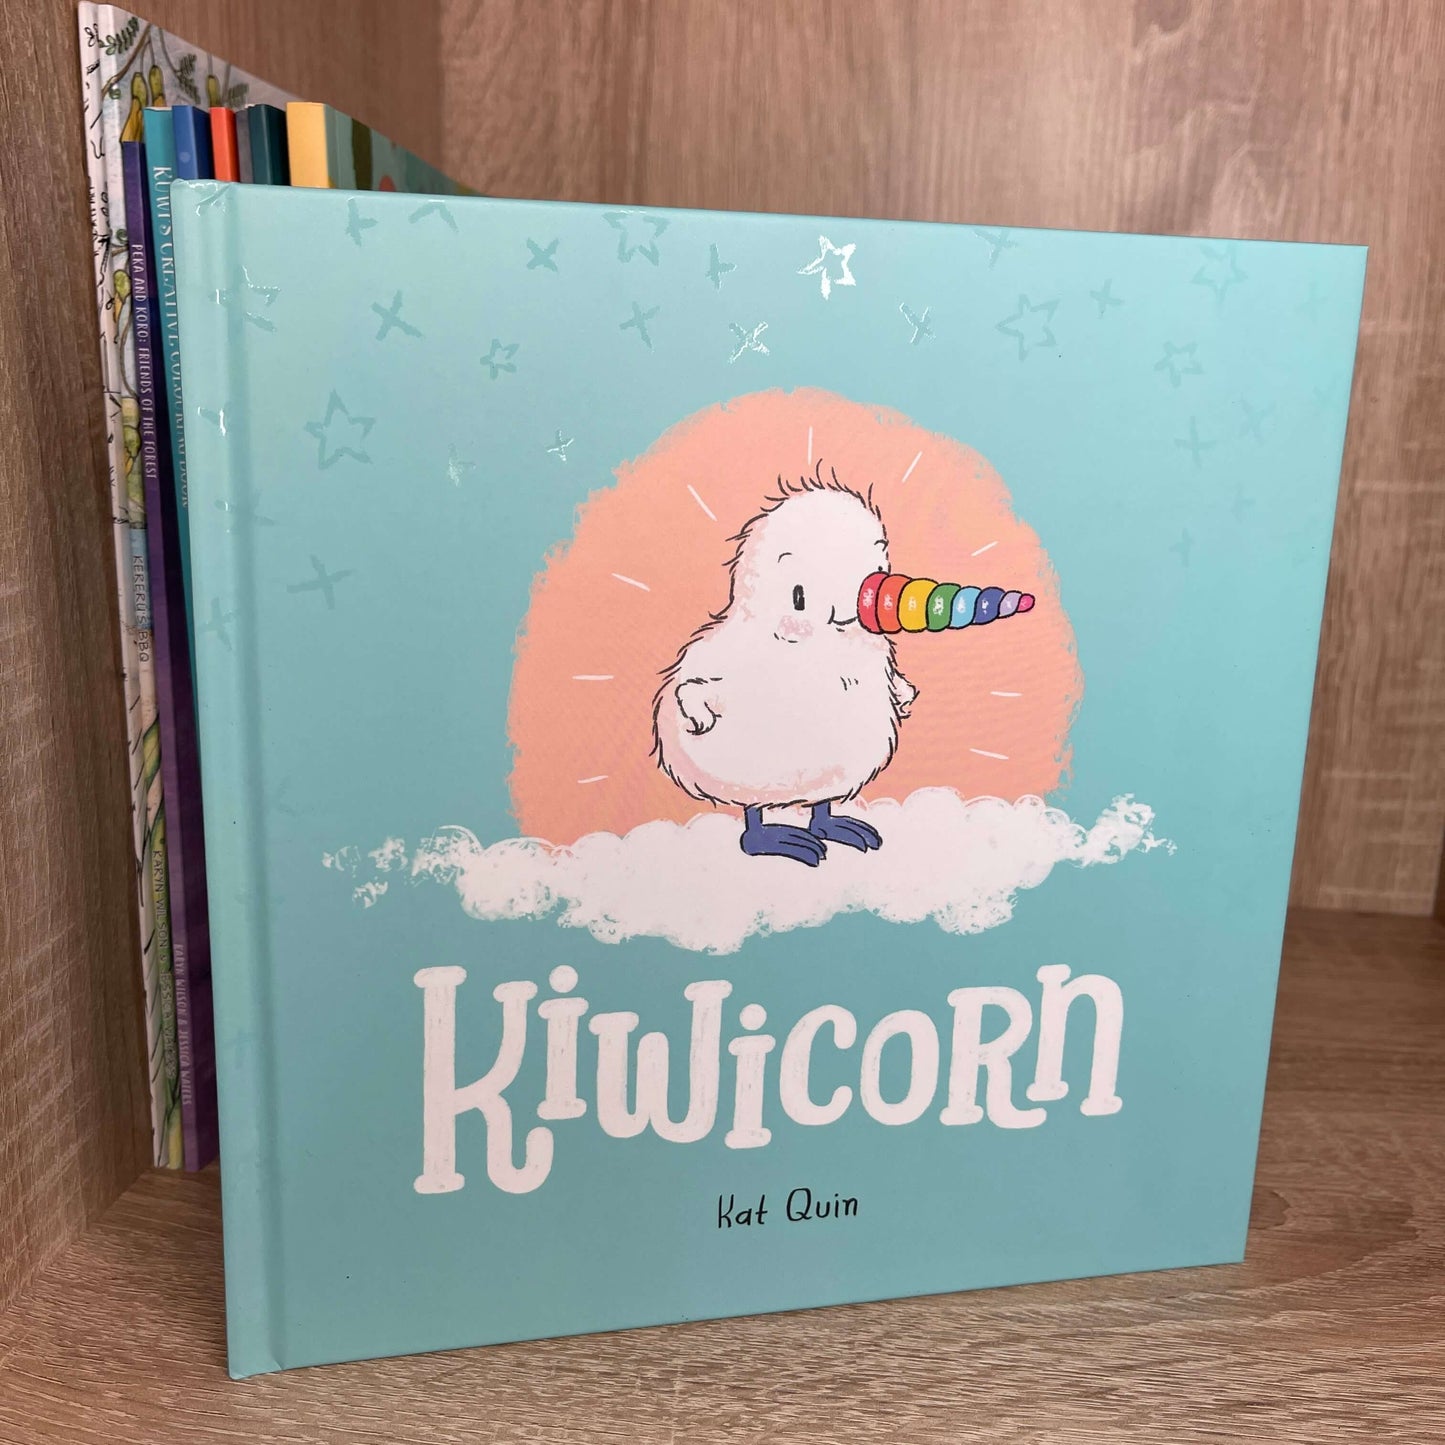 Childrens book Kiwicorn by Kat Merewether.